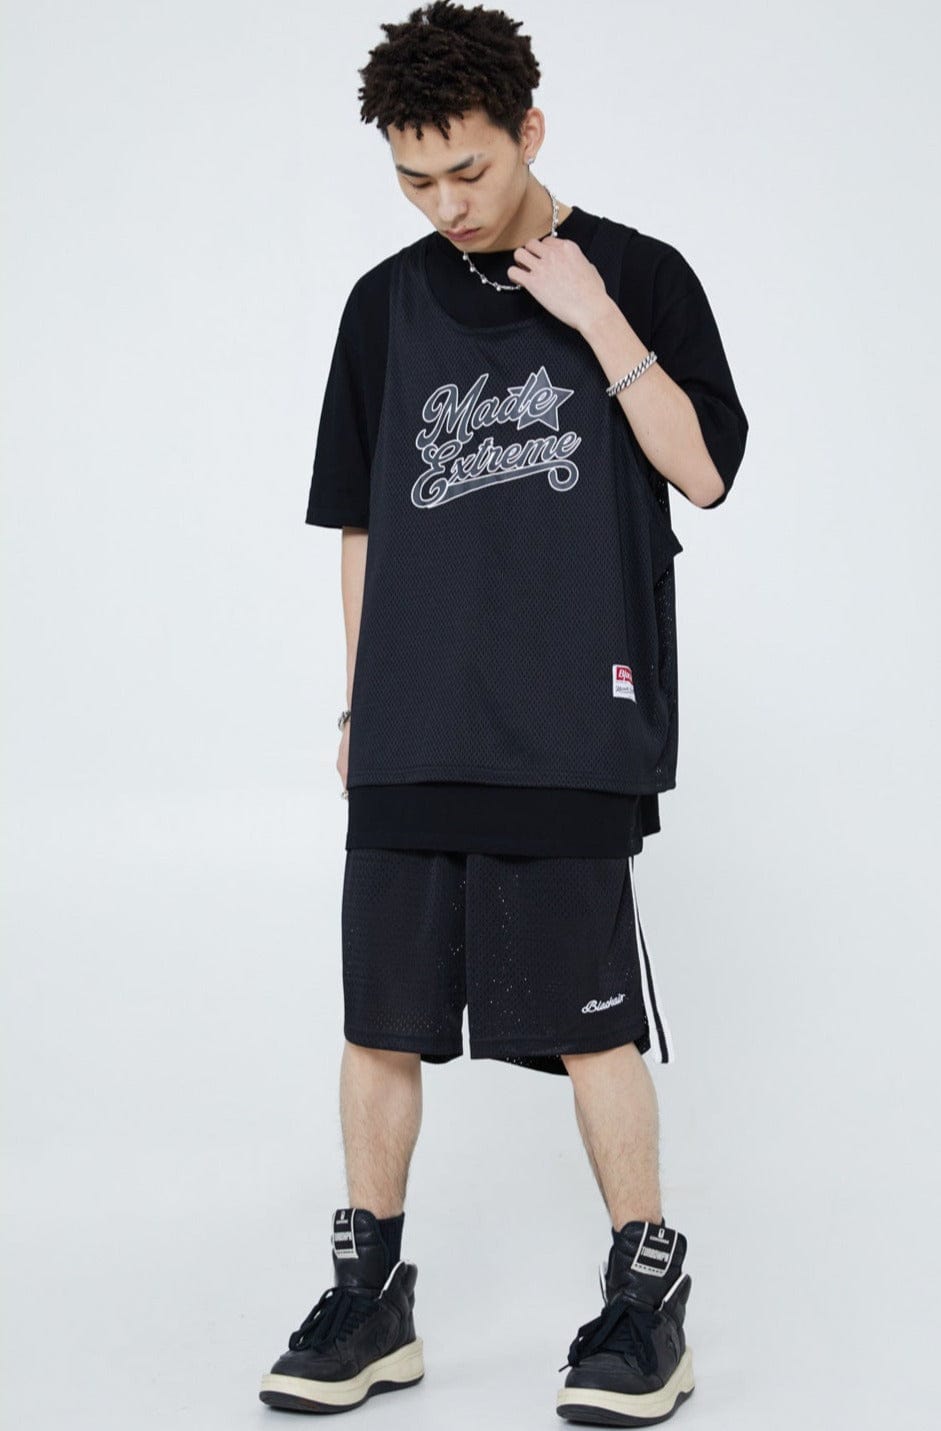 MADE EXTREME Basketball Vest T-Shirt Streetwear Brand Techwear Combat Tactical YUGEN THEORY